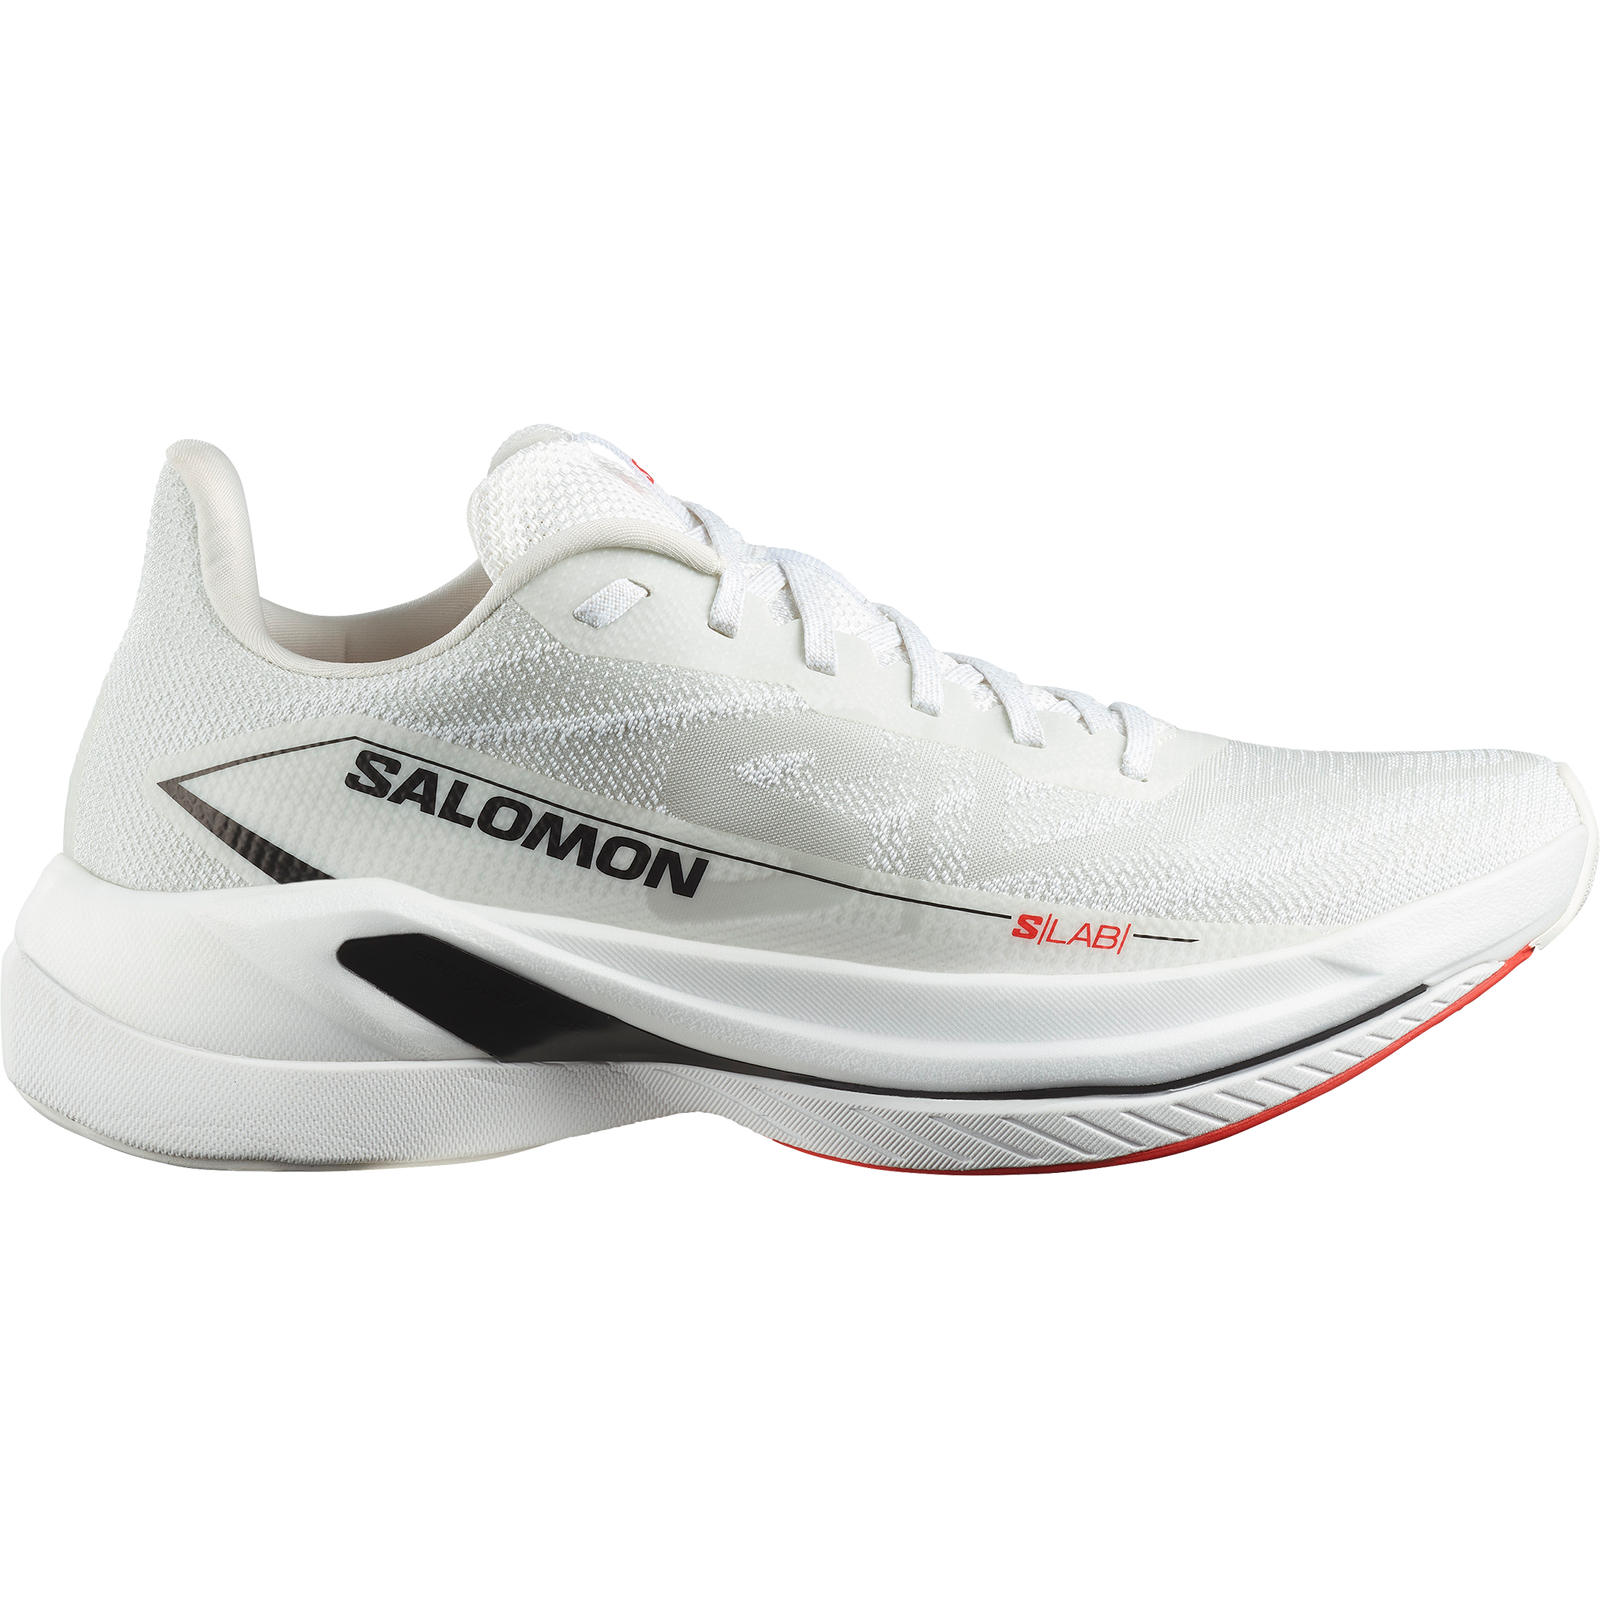 Salomon S/LAB Spectur Unisex Road Runnung Shoes